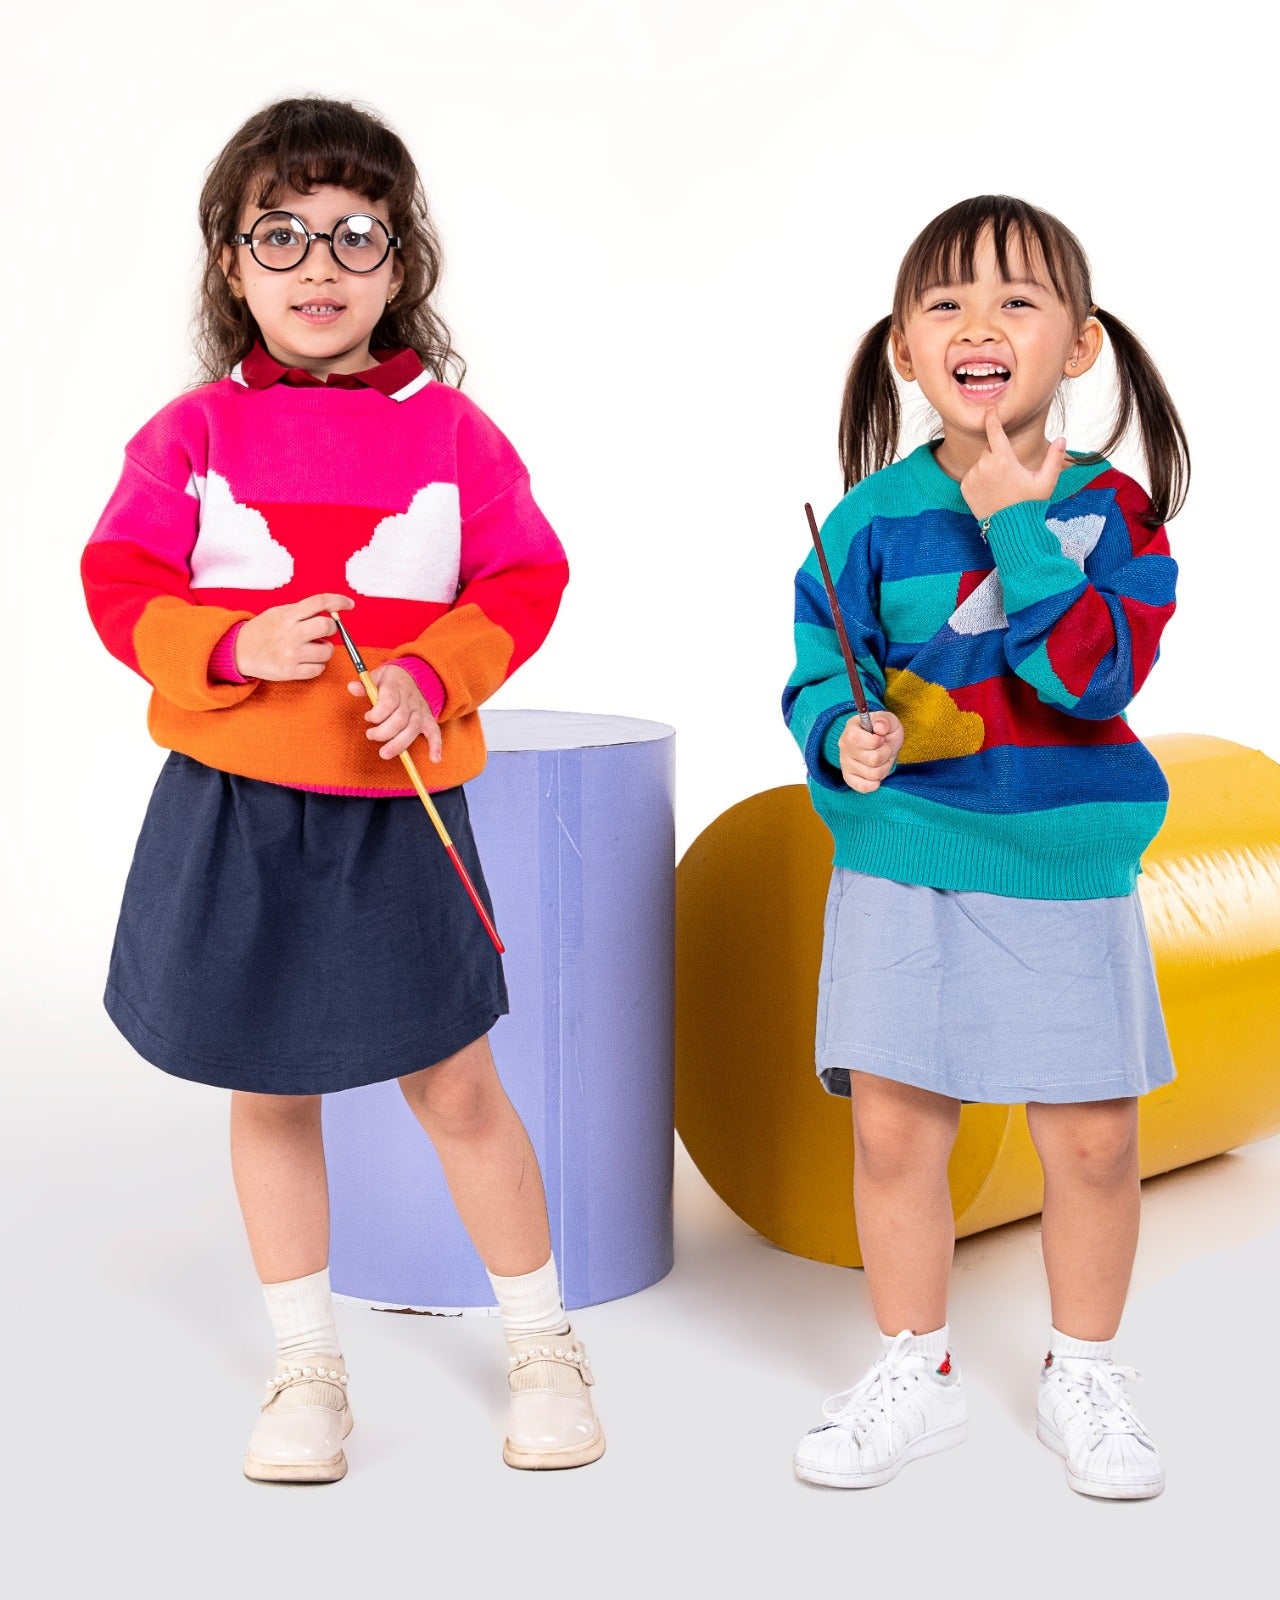 Booyah Baby & Kids Dawn Knit Sweatshirt